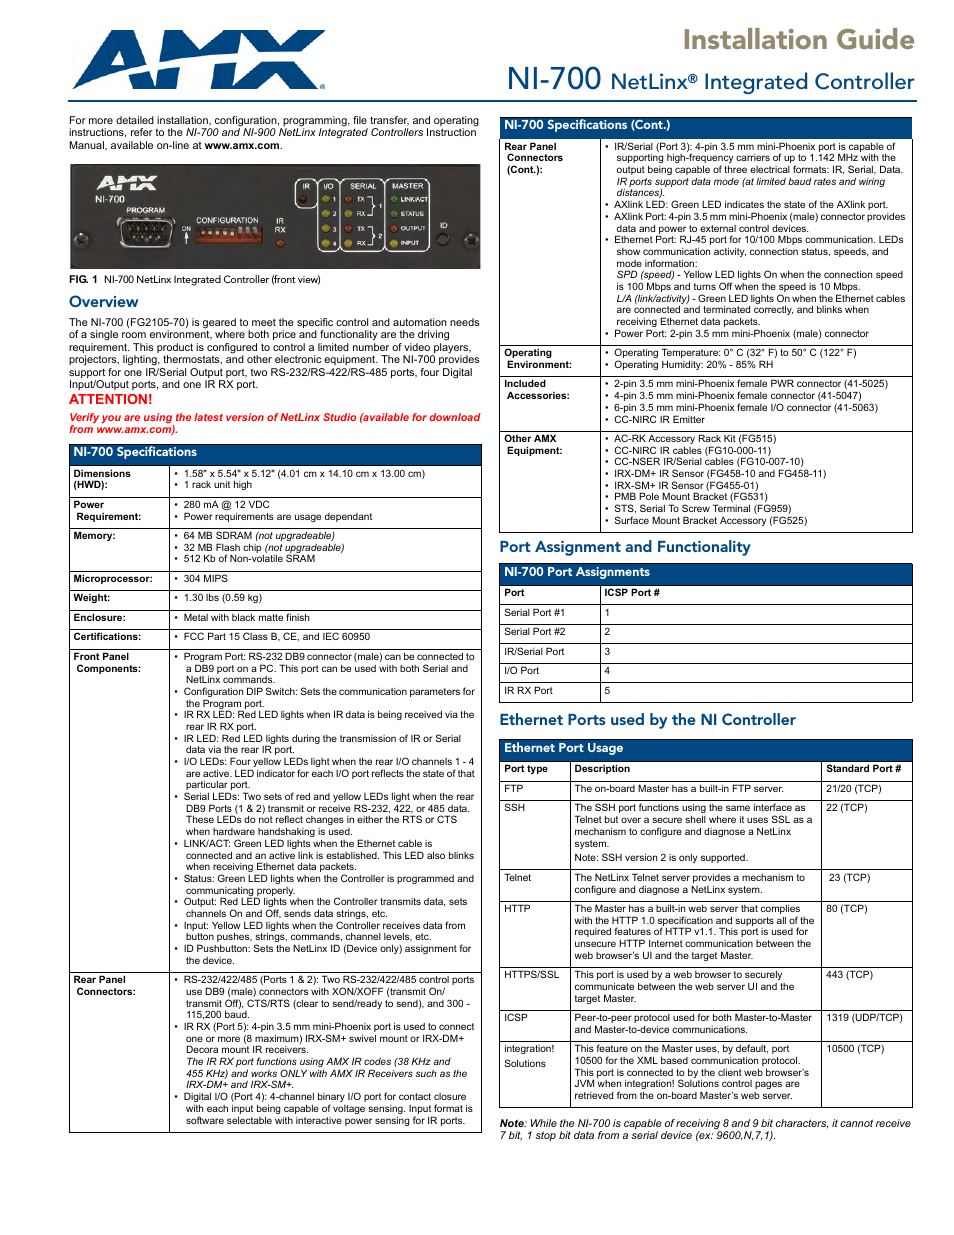 NetLinx Integrated Controller NI-700